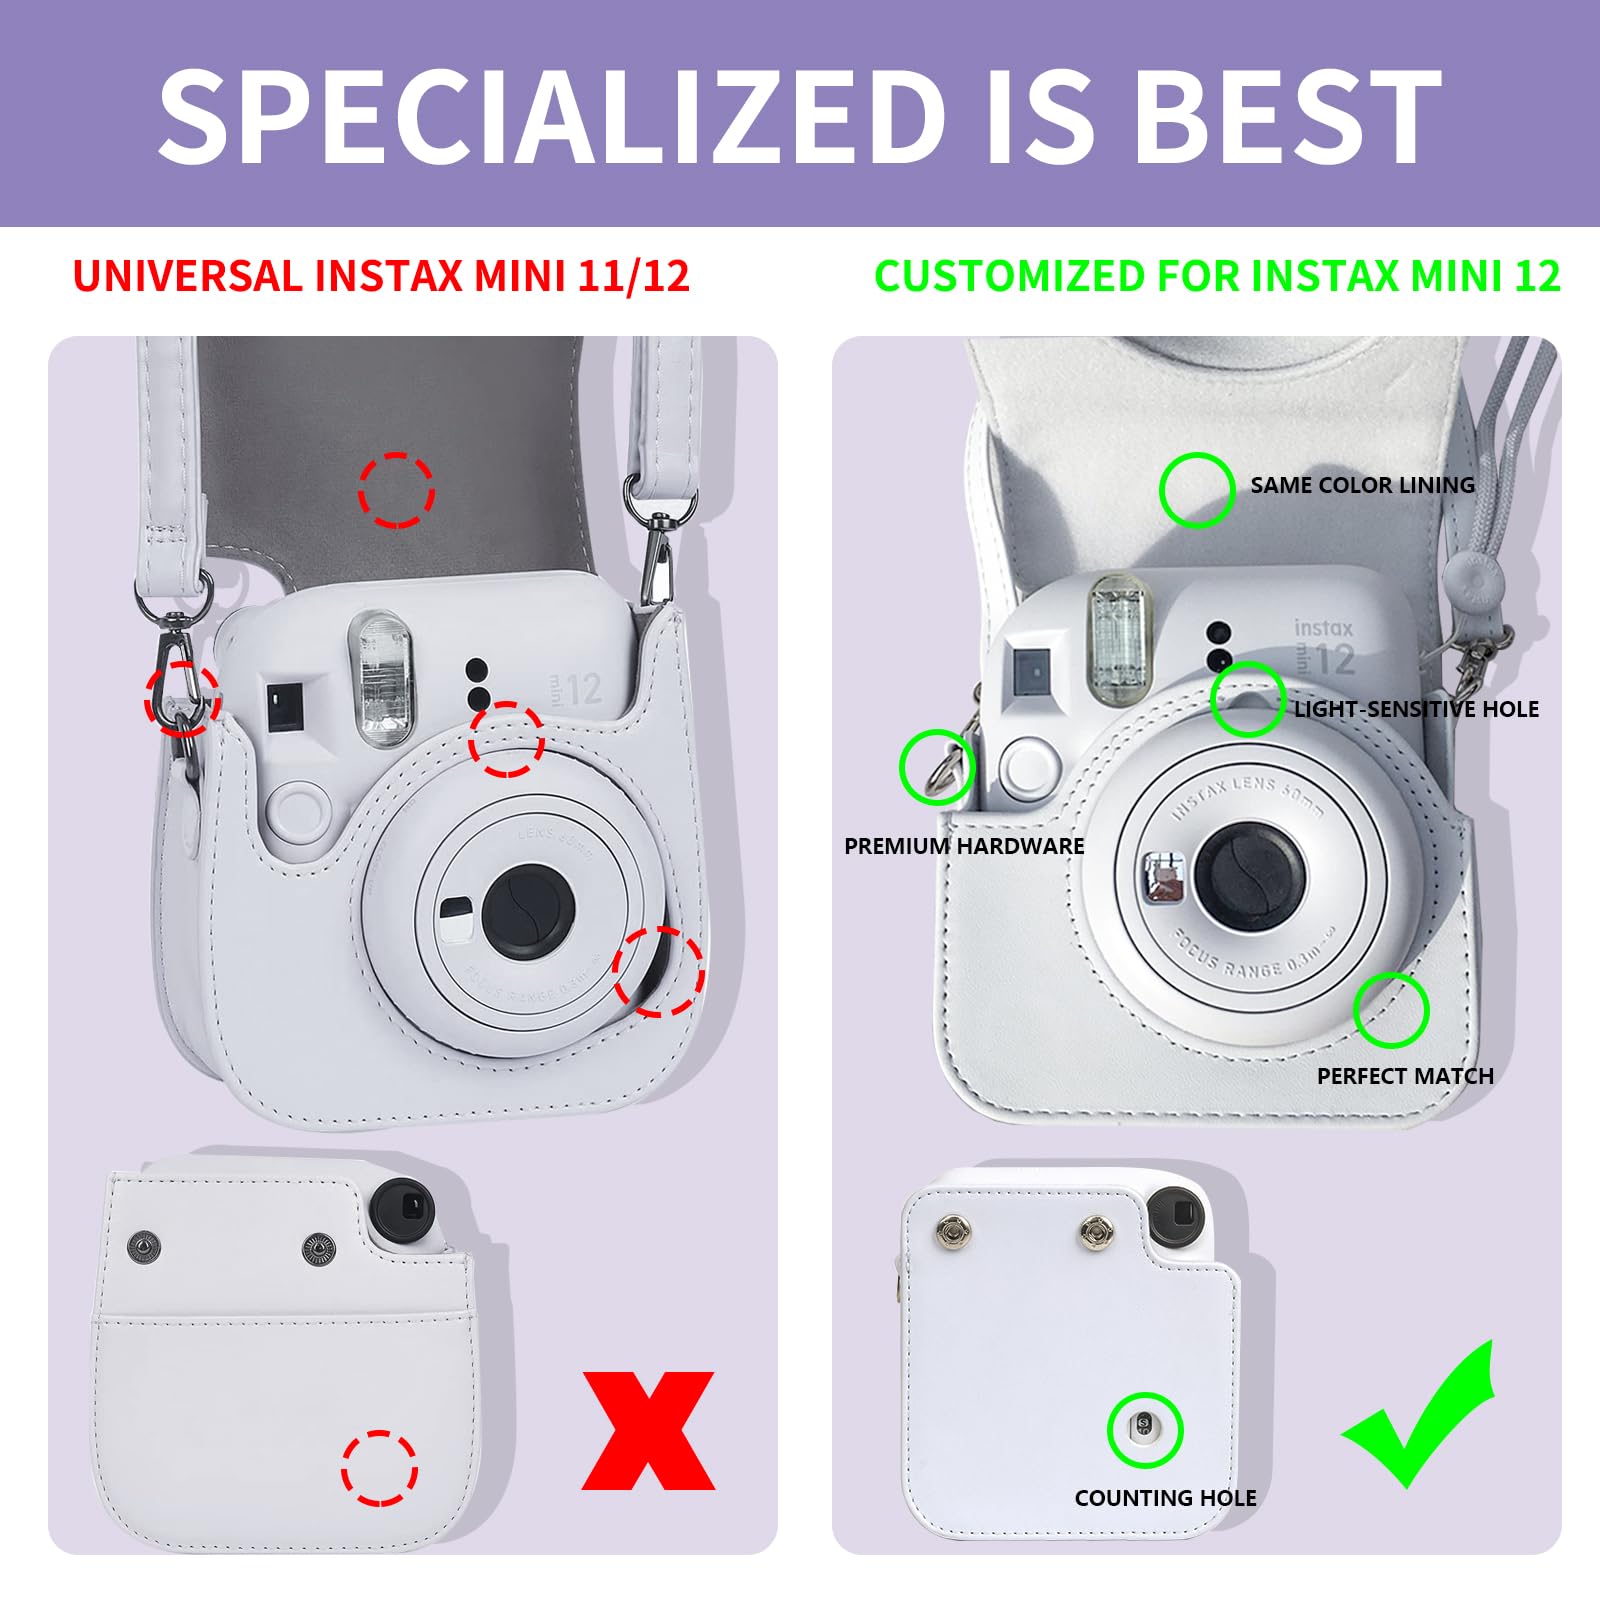 CAIYOULE Accessories for Fuji Instax Mini 12 Camera, Accessory Bundle Include PU Leather 12 Case, Mini Picture Album, Frames, DIY Stickers, Color Filter (No Camera) - Lilac Purple